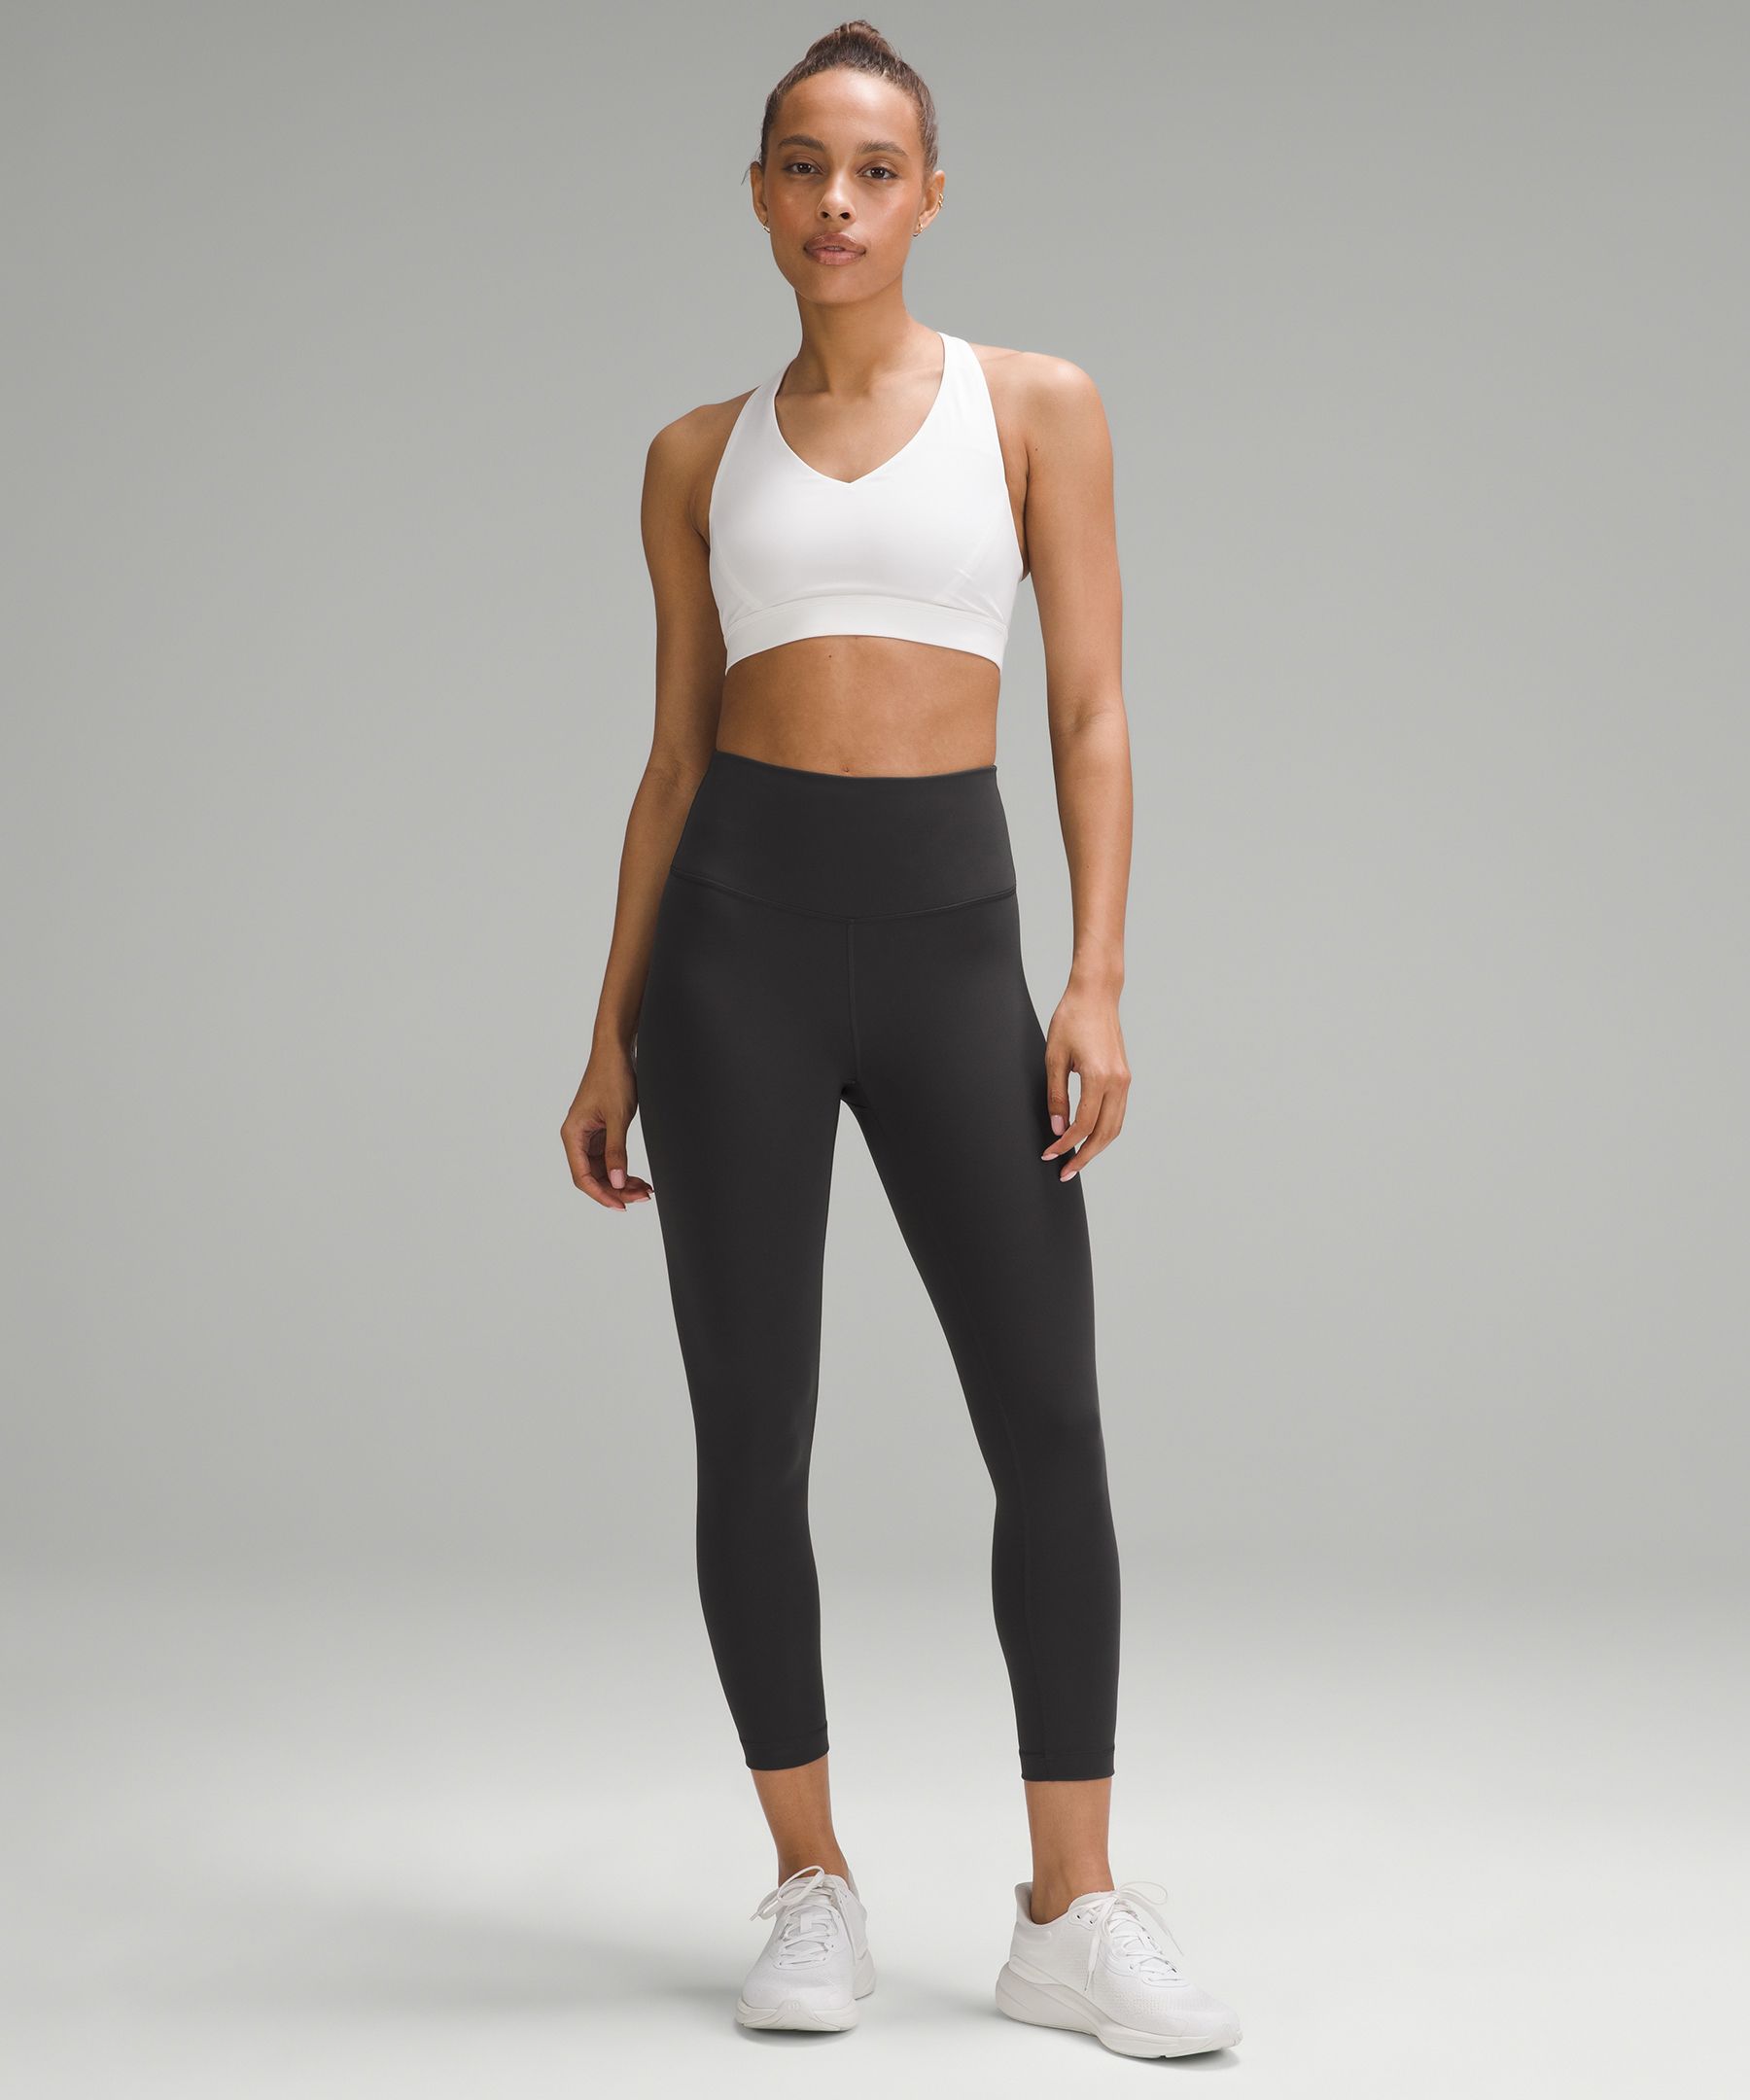 Plus Size 3/4 Leggings for Women Yoga Capri Pants High Waisted Stretch  Lightweight Cutout Hem Print Workout Capris (XX-Large, Black2) 